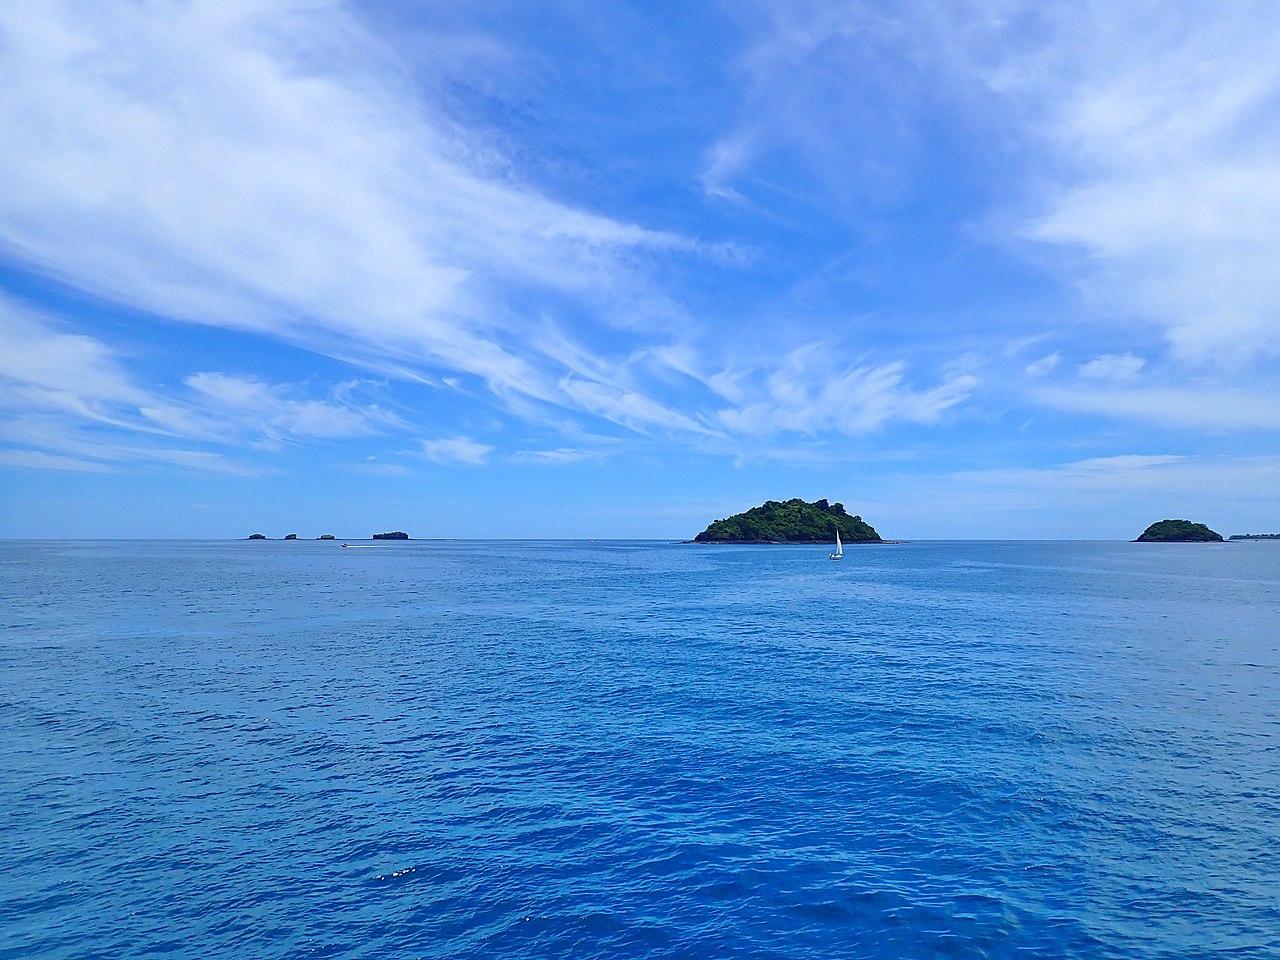 Islas Mayotte, donde se originó la onda. Foto: Frédéric Ducarme